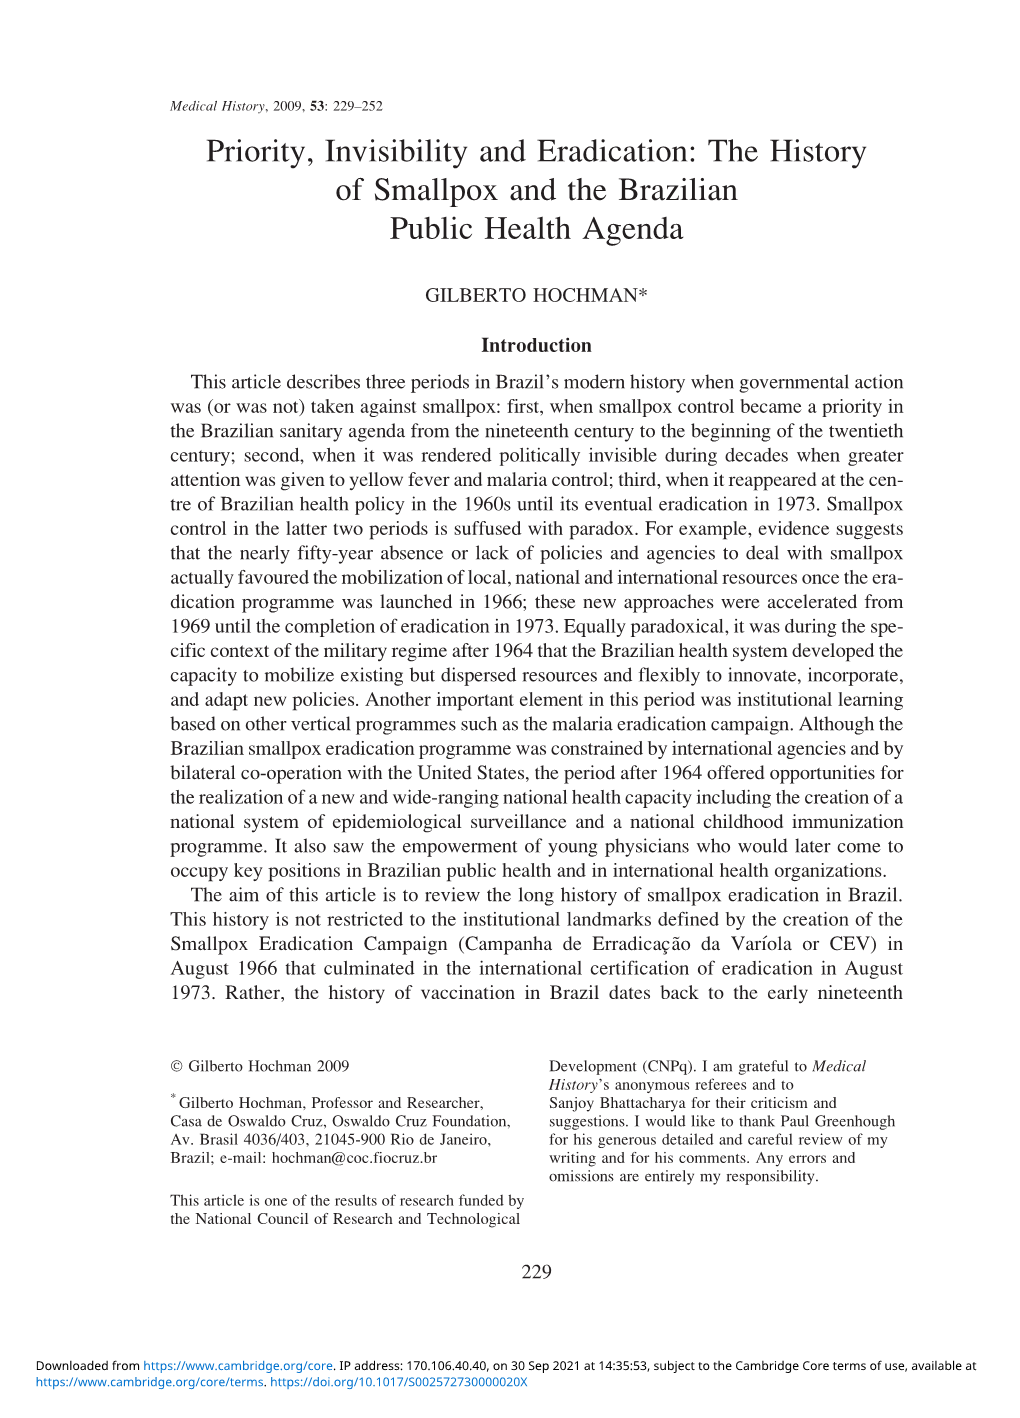 Priority, Invisibility and Eradication: the History of Smallpox and the Brazilian Public Health Agenda